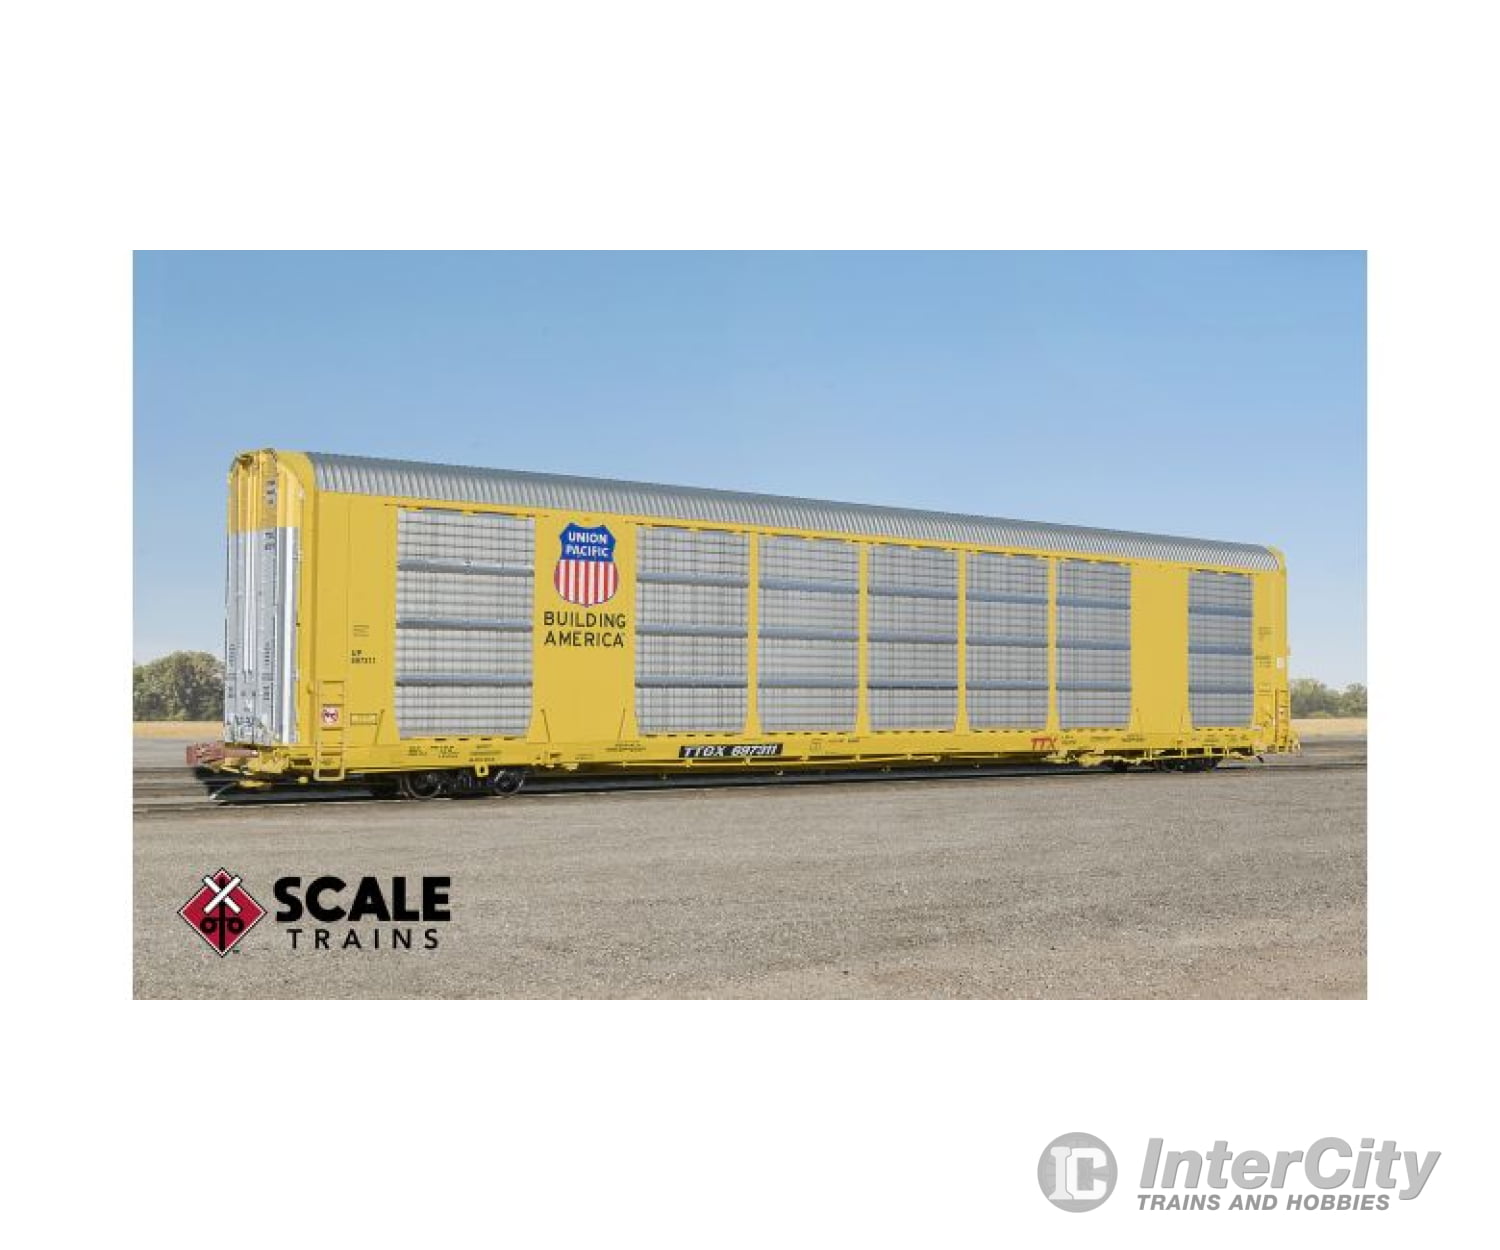 Scale Trains Sxt32785 Gunderson Multi-Max Autorack Union Pacific/Building America/Ttgx Rd# Ttgx